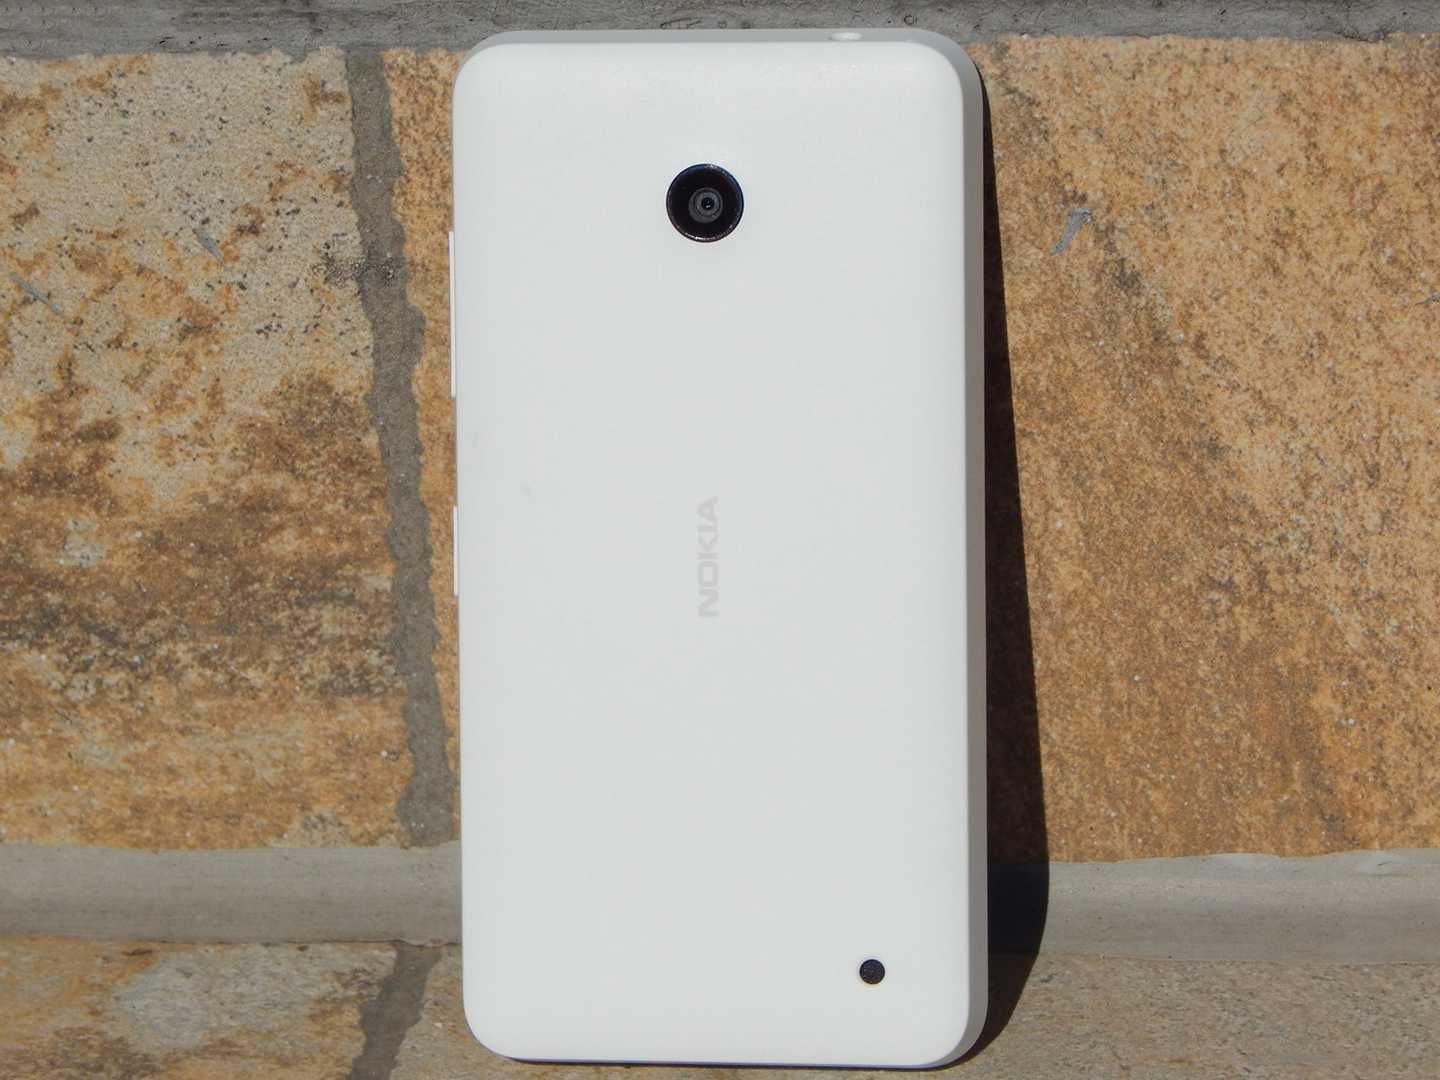 Telefon Nokia Lumia 635 RM-974 necesita resoftare sistem op Windows